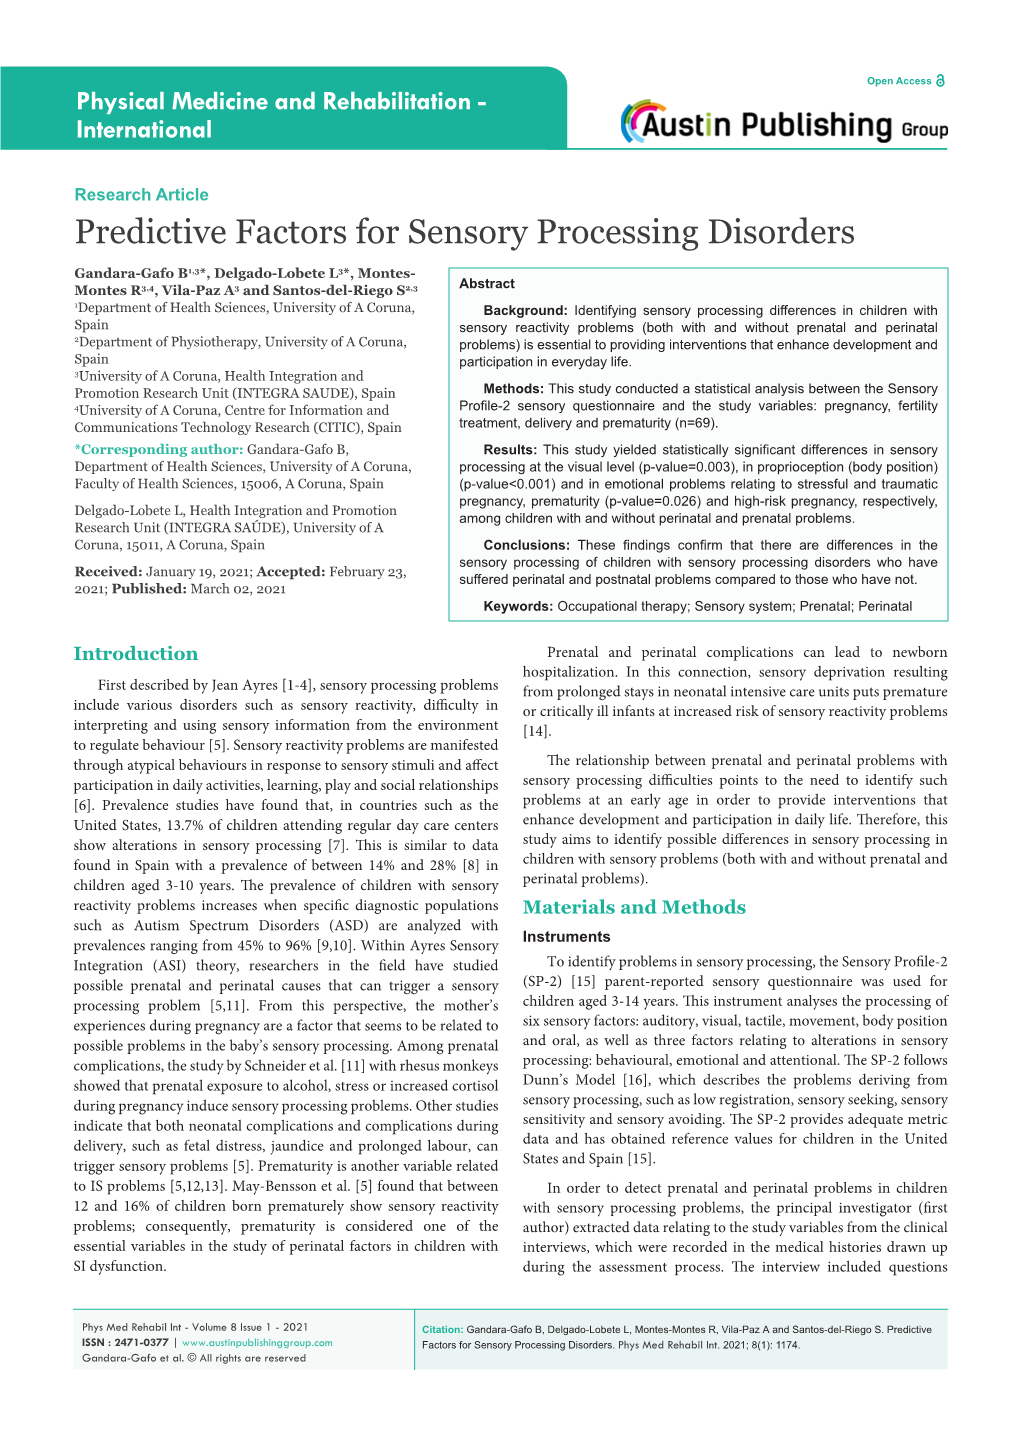 Predictive Factors for Sensory Processing Disorders